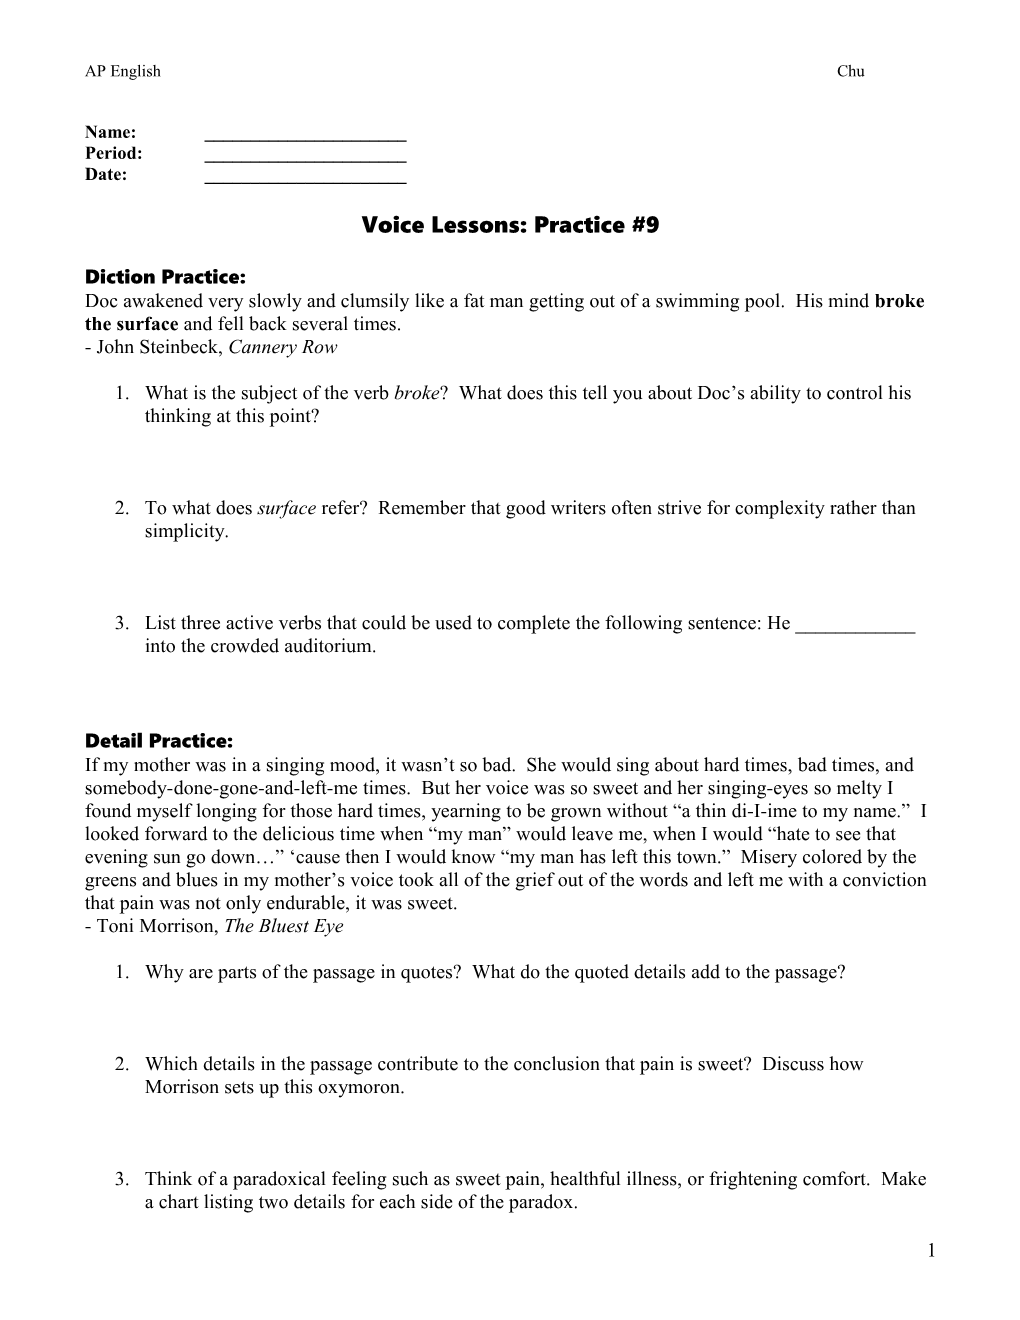 Voice Lessons: Practice #9